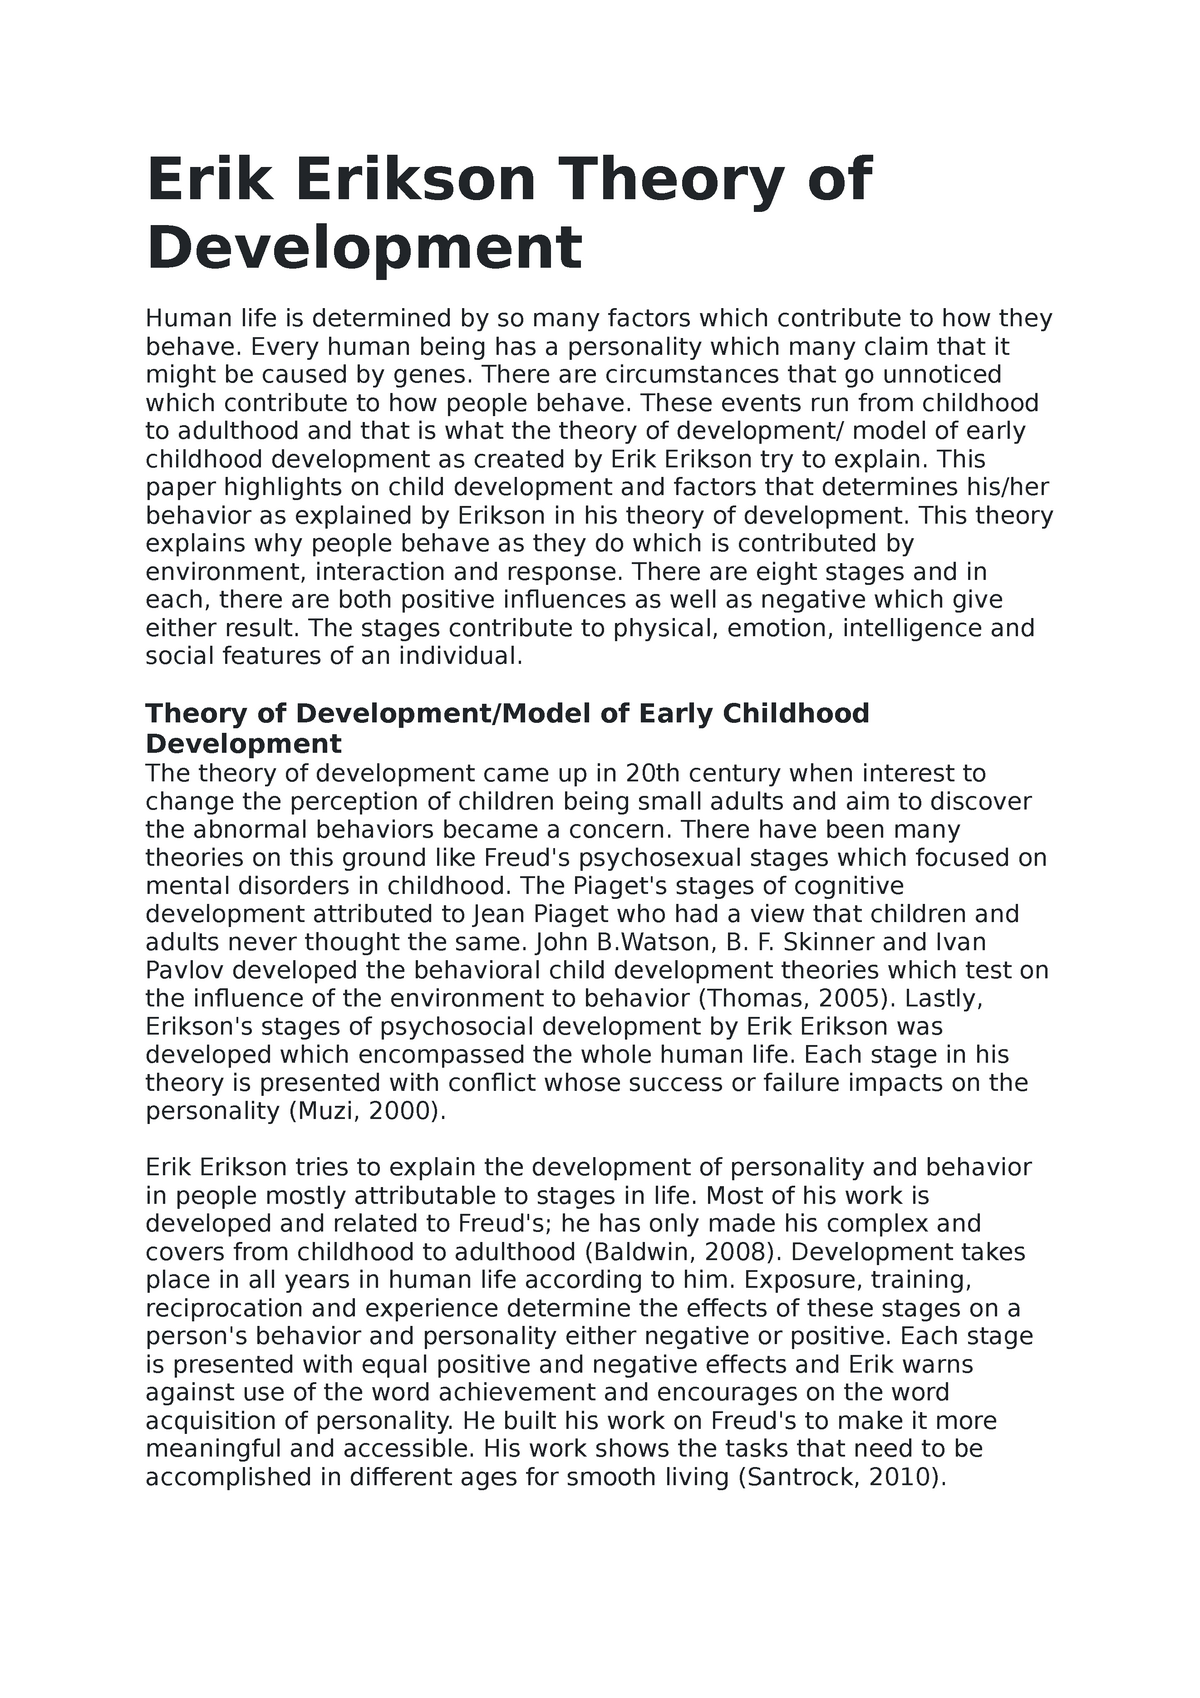 development theory essay